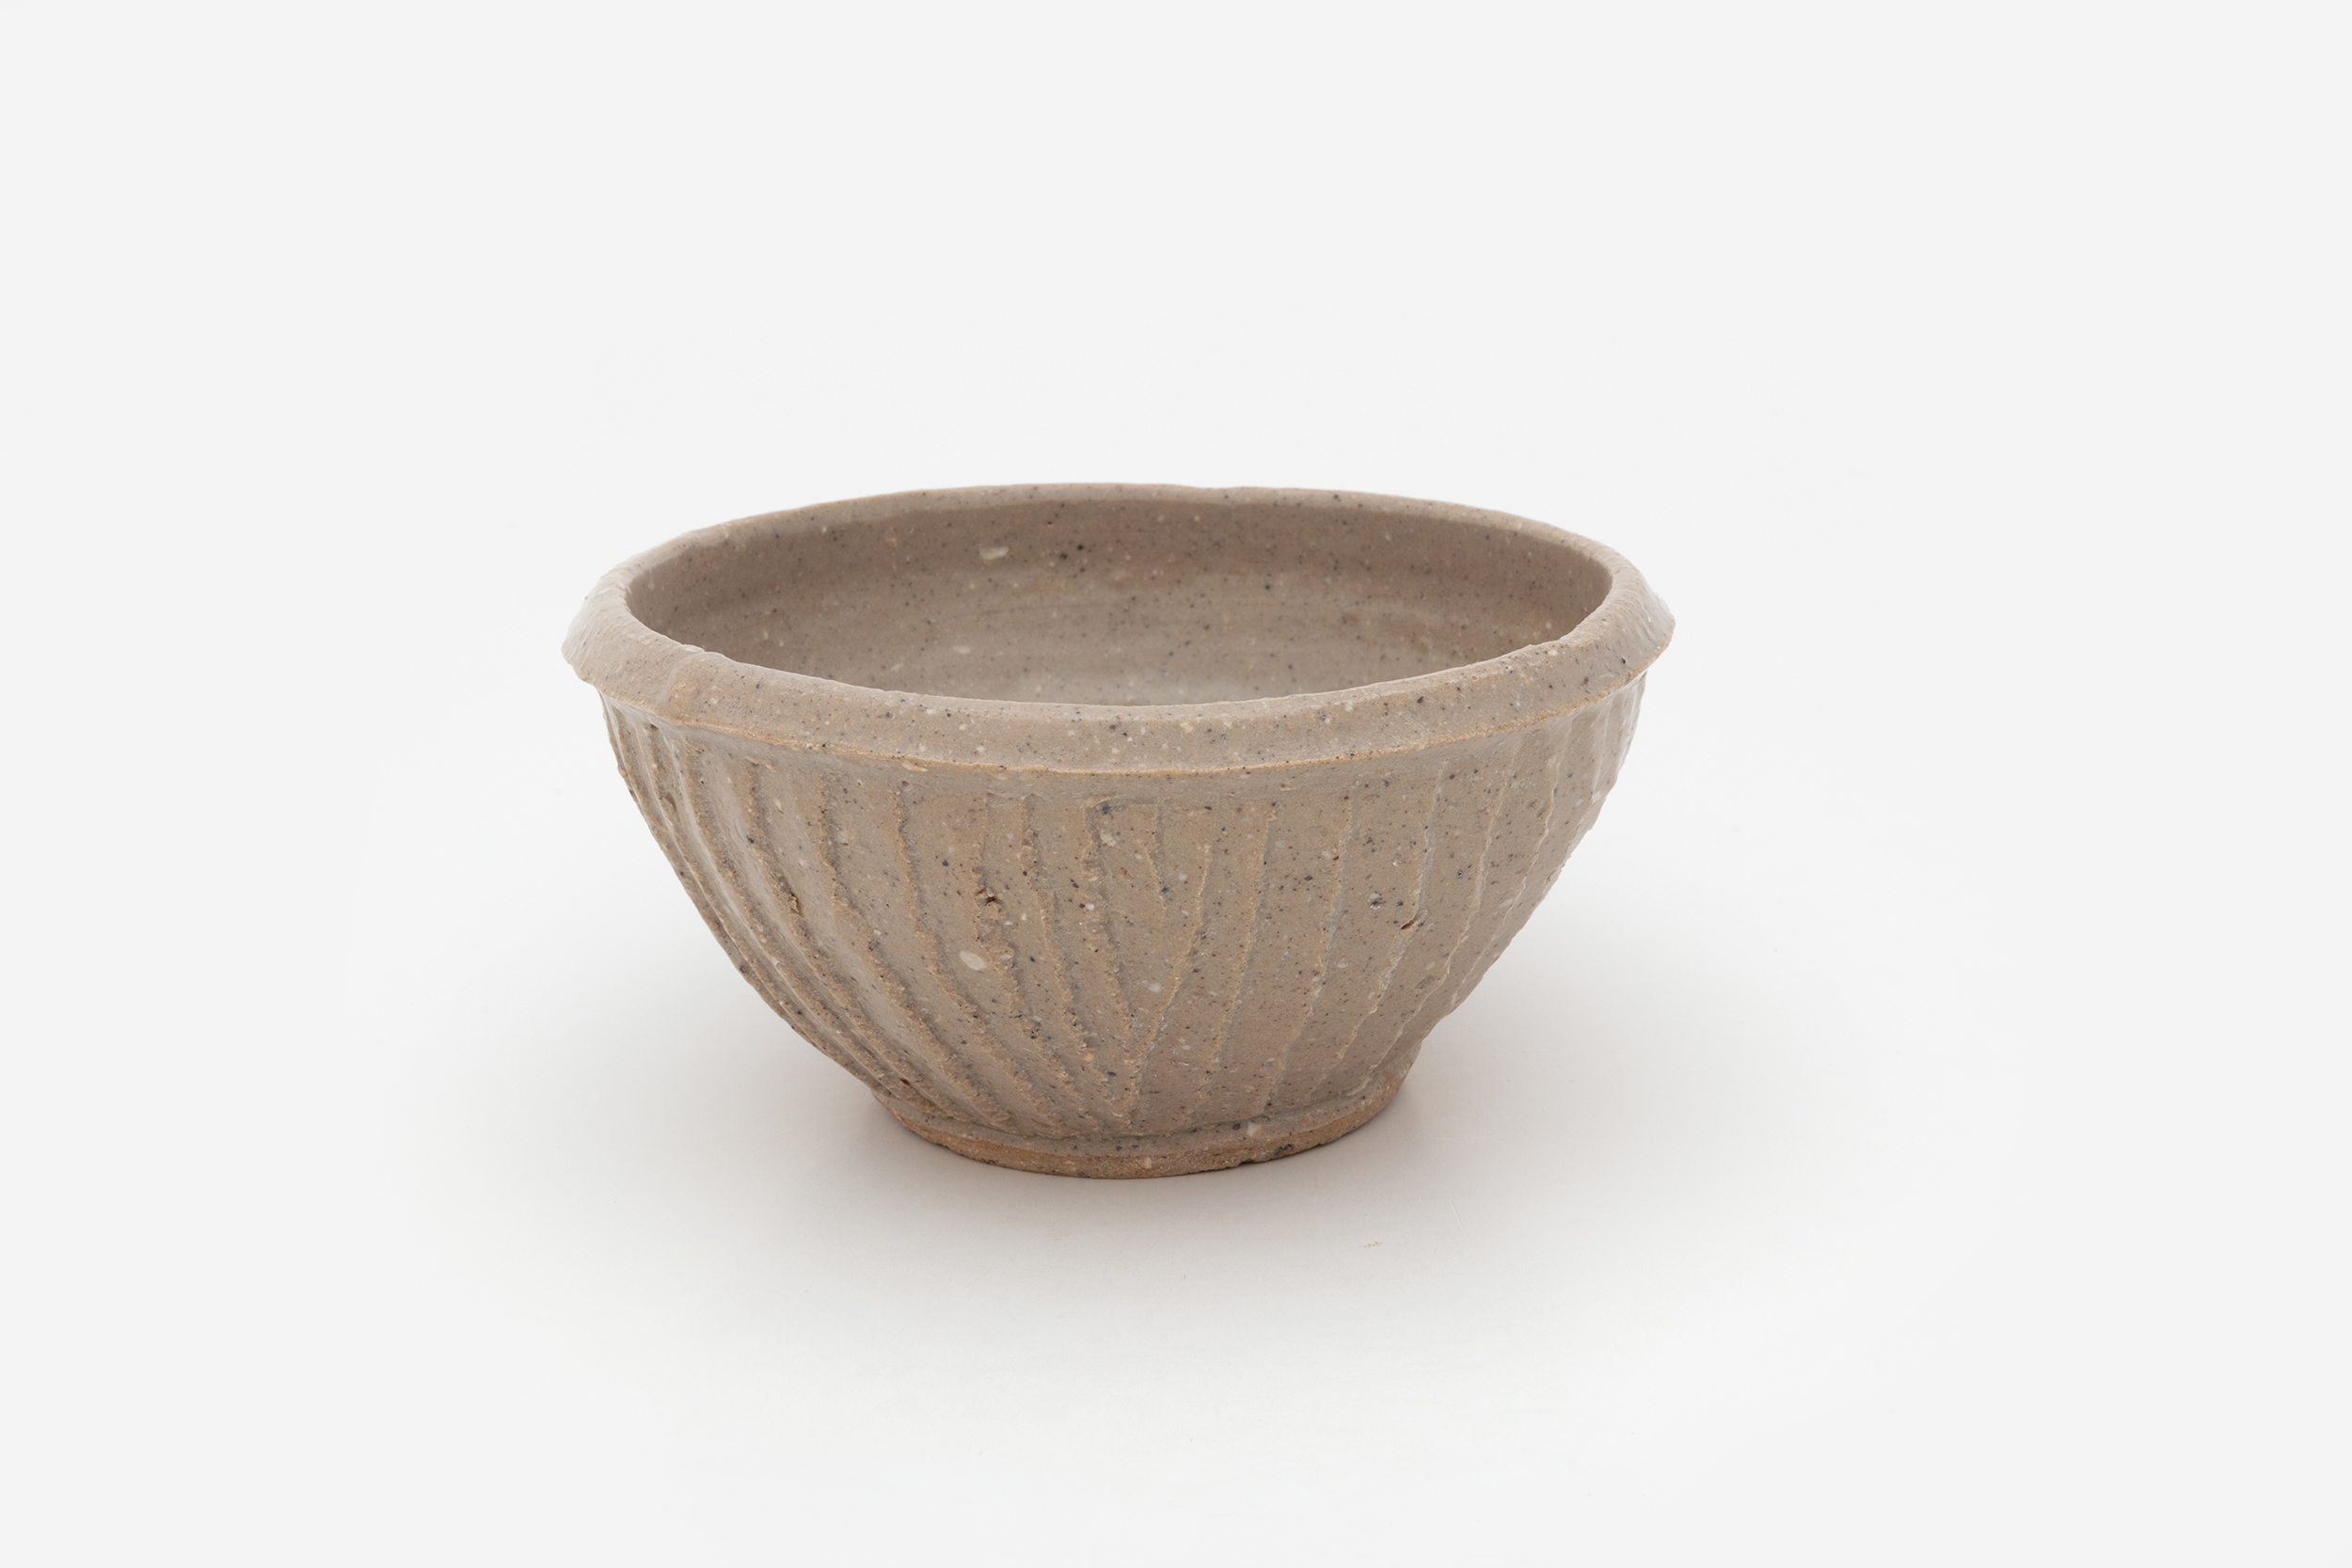 Hylton Nel - Small bowl II, 